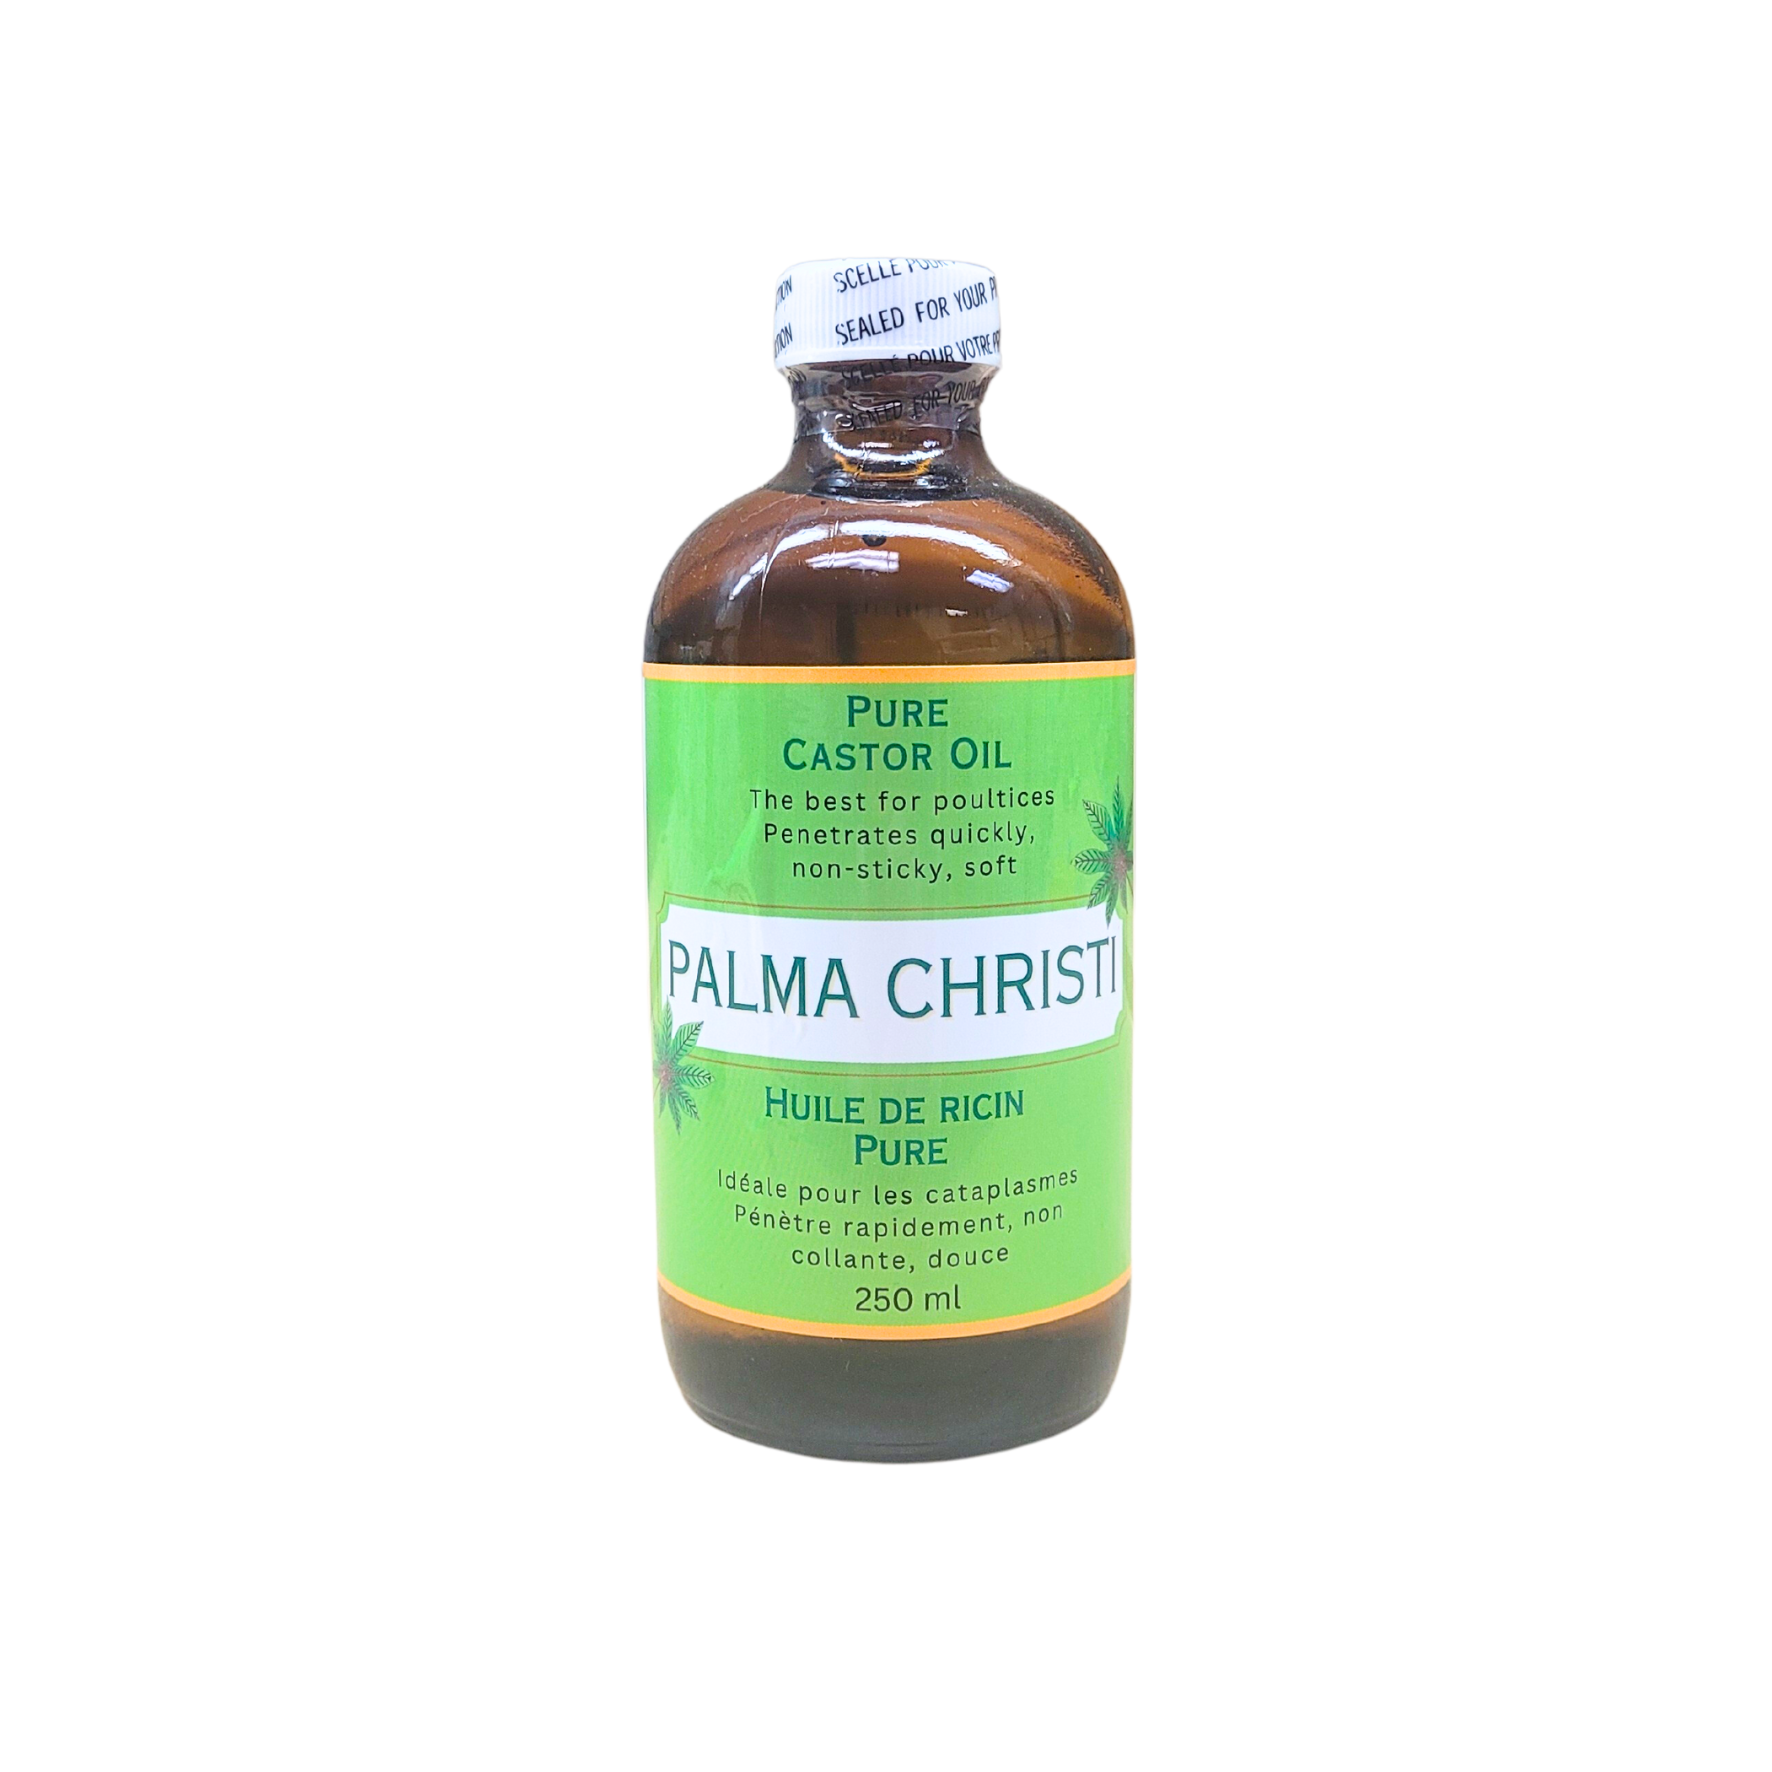 Palma christi - huile de ricin pure (anciennement l'originelle)